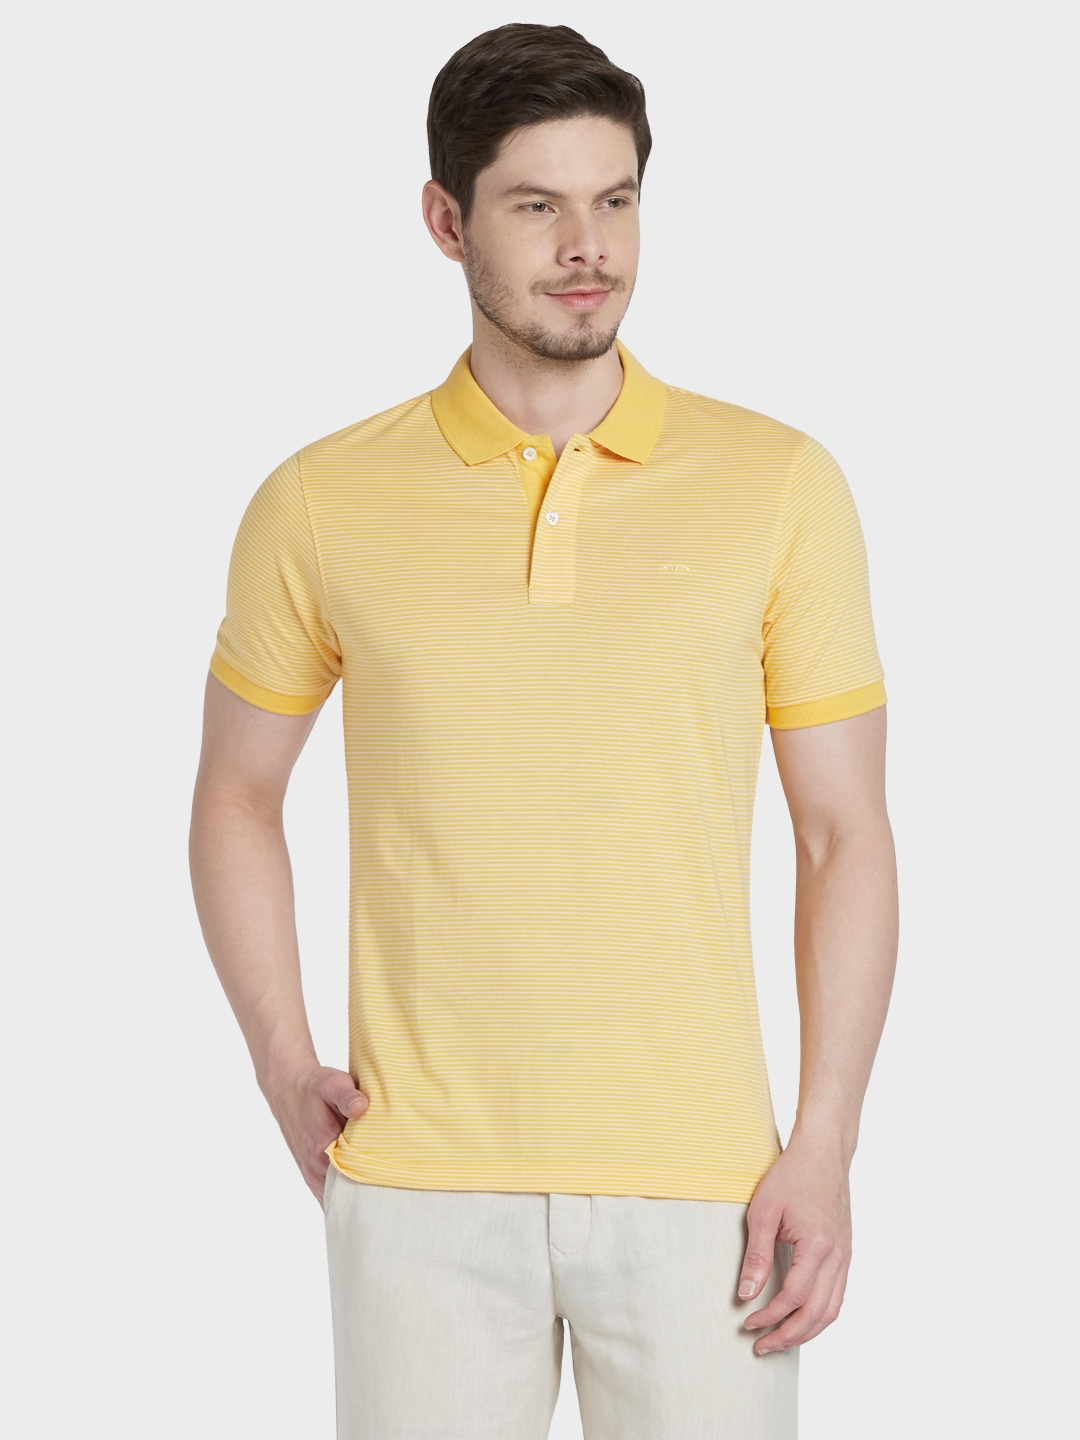 ColorPlus | ColorPlus Yellow T-Shirt